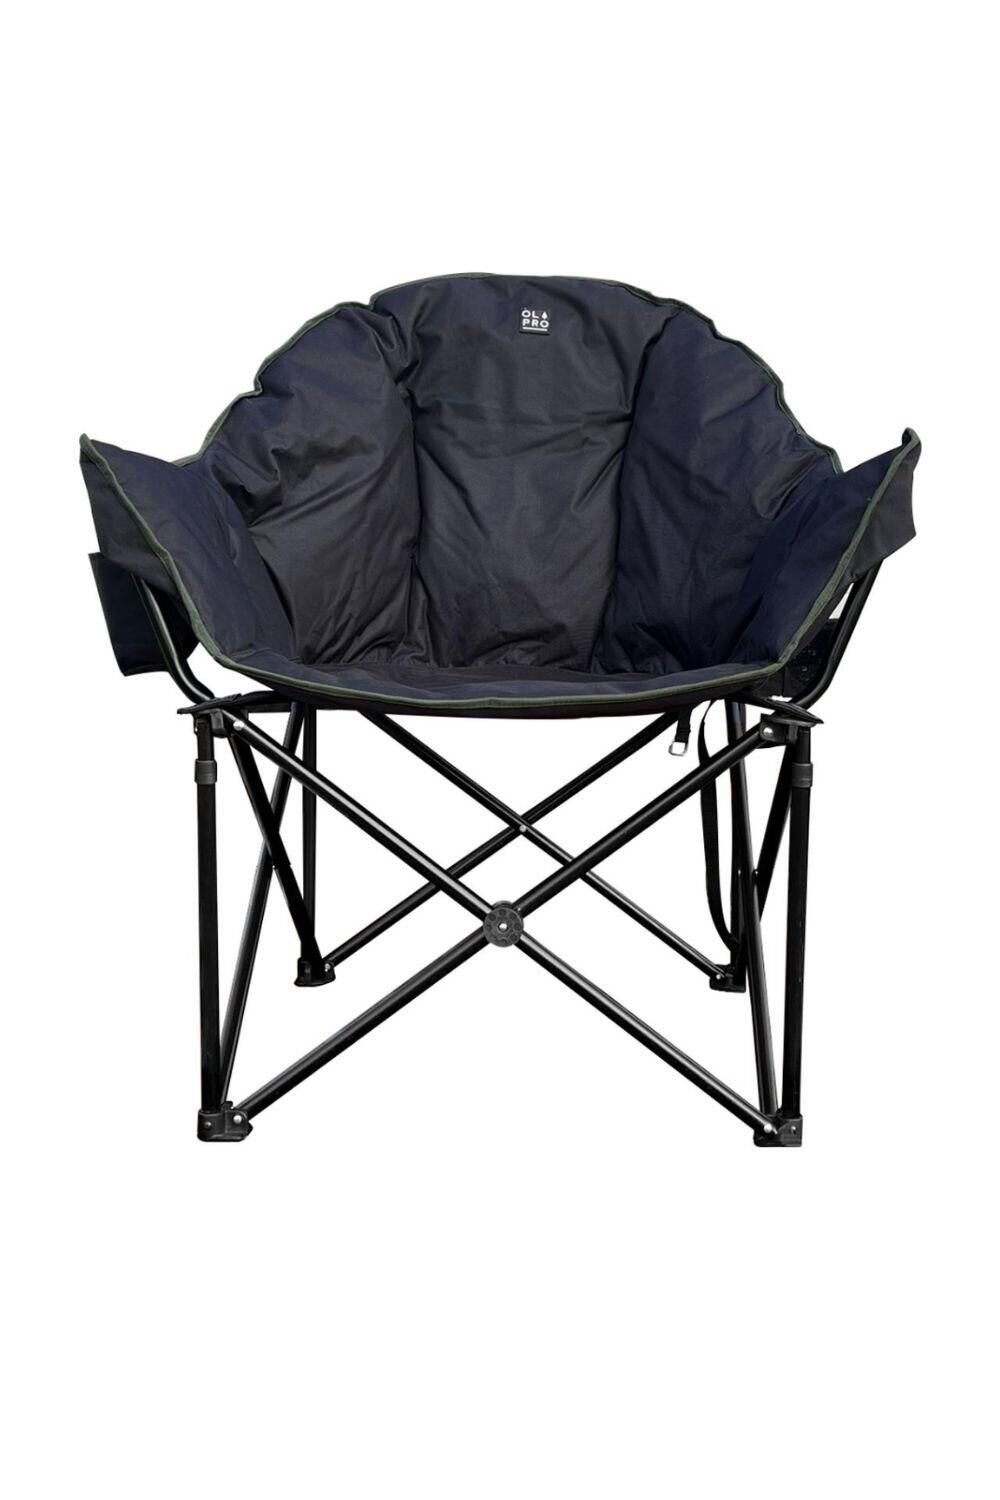 OLPRO OLPRO Olympus XL Chair- Black & Green